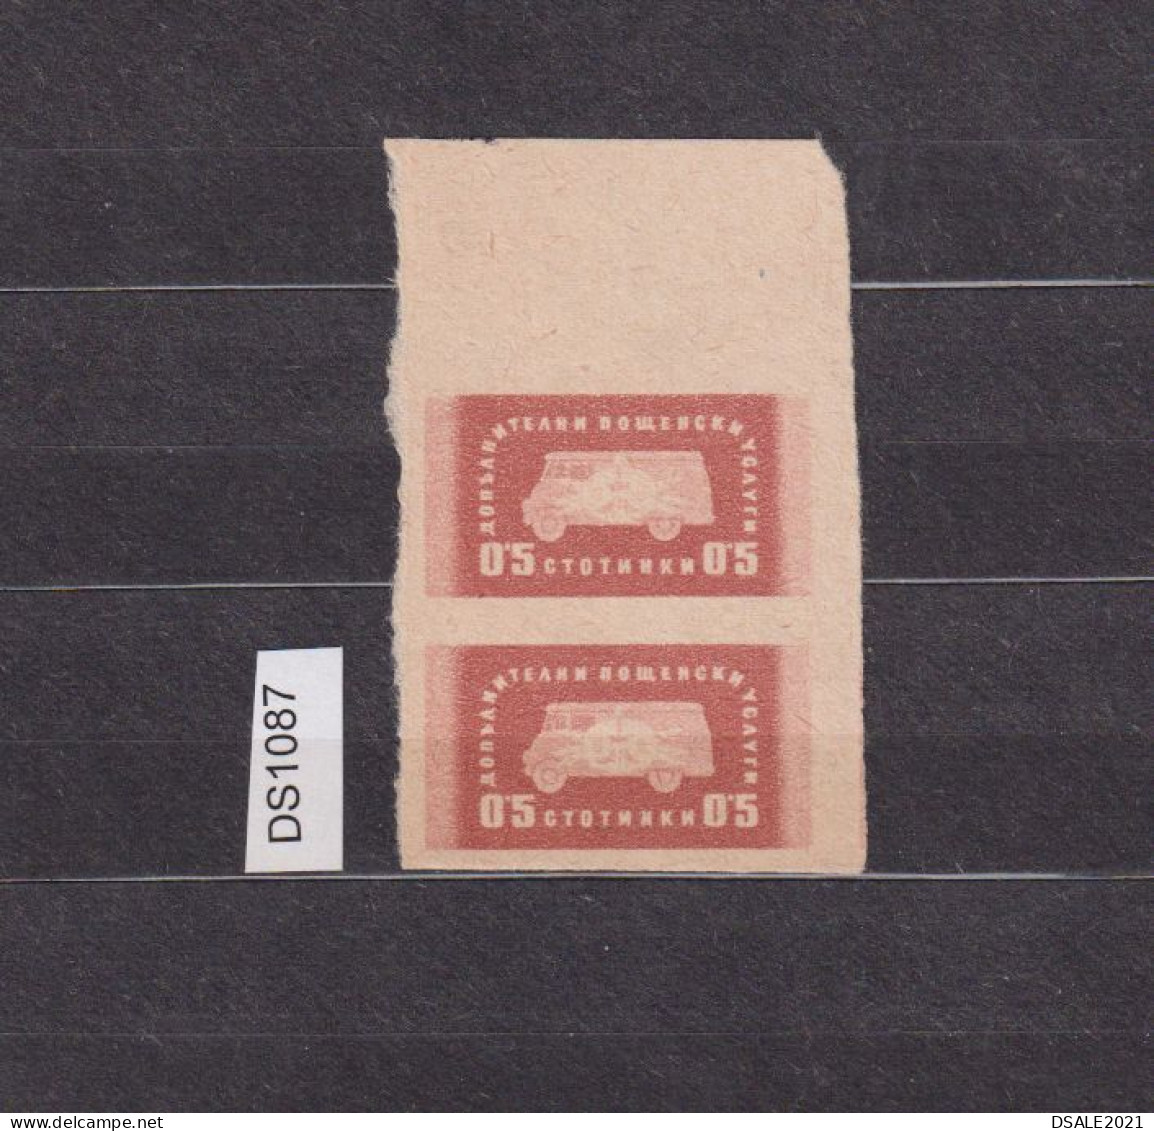 Bulgaria Bulgarie Bulgarien 1960s Additional Postal Service Fee Tax 2x0.50st. Stamps Pair Imperf. Unused NO GUM (ds1078) - Francobolli Di Servizio